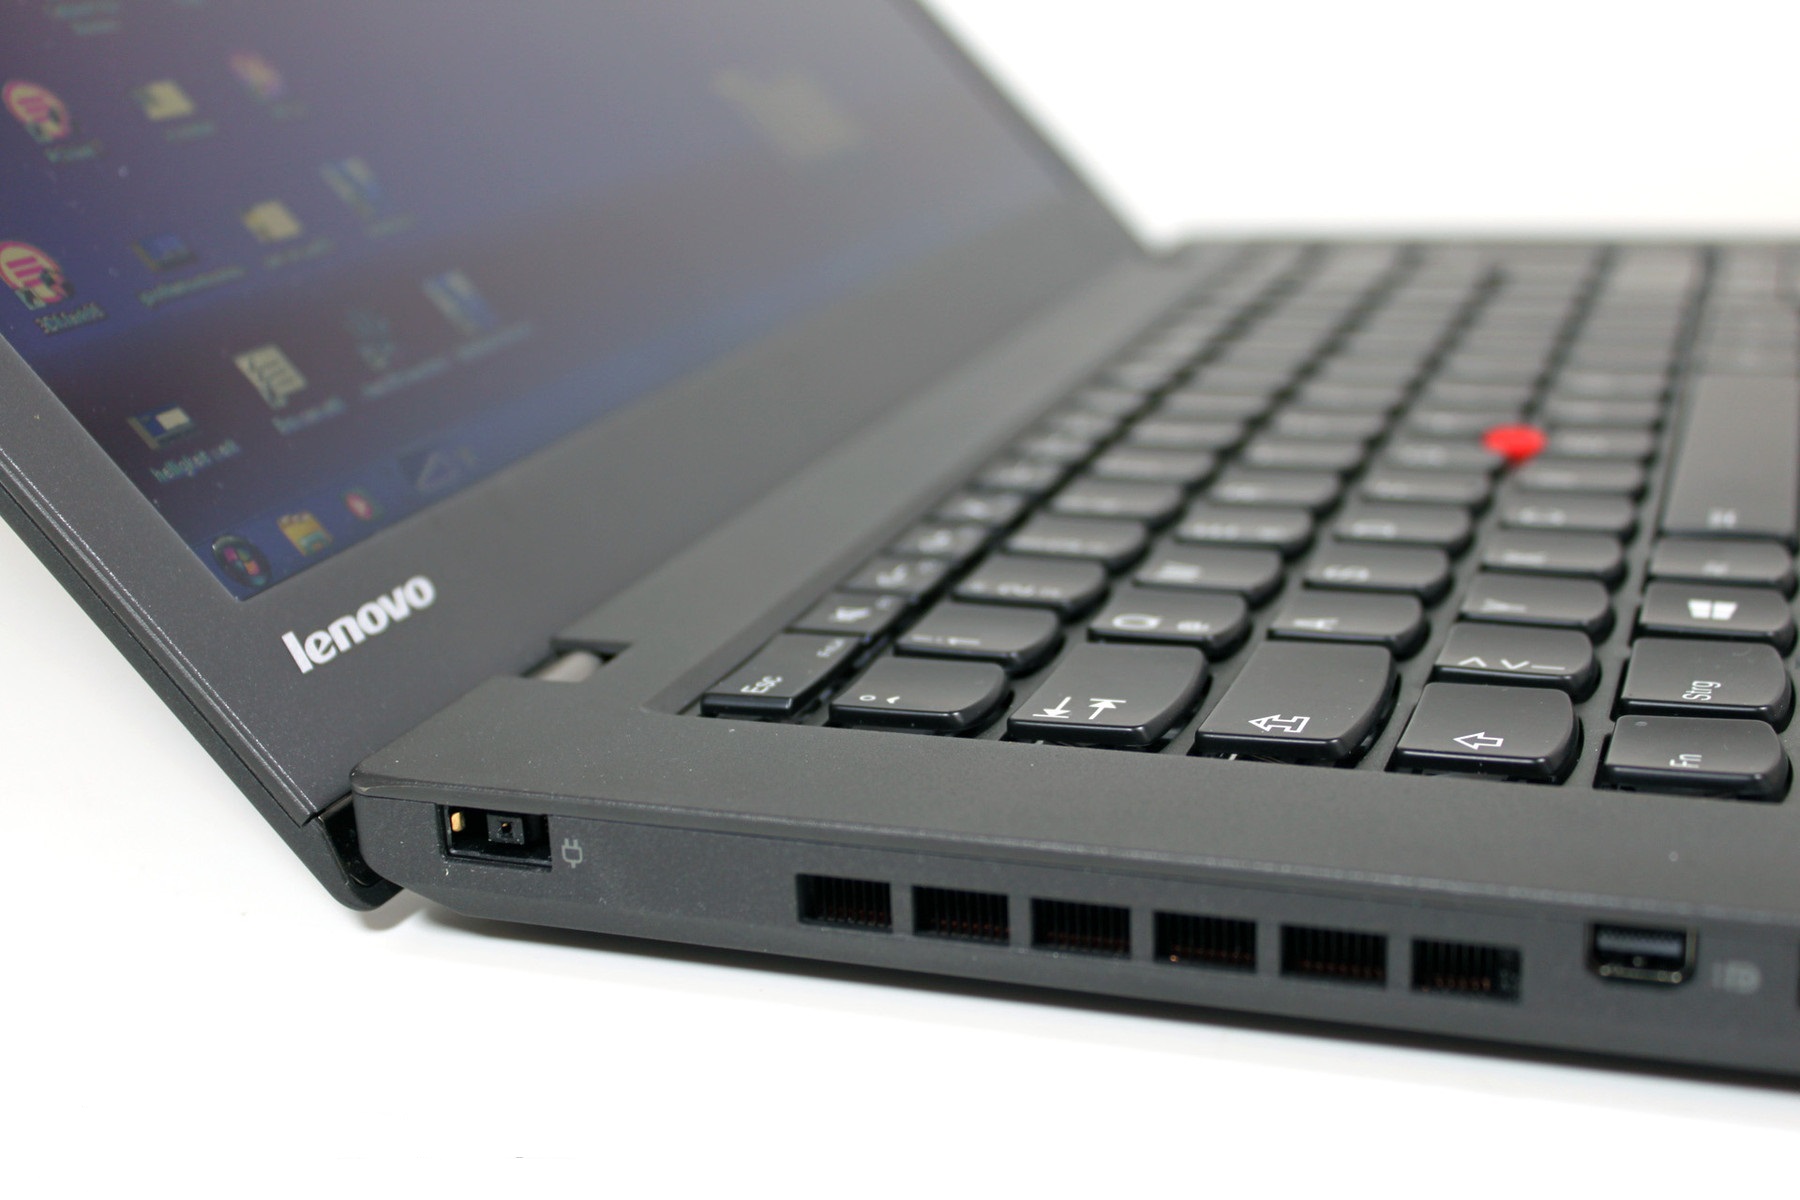 Laptop Lenovo T440, Procesador i5 4200U 2.3 GHz, 4ta gen,  8Gb Ram, Disco duro 500Gb,  Display 14", Webcam, Teclado Ingles, no DVD-RW,  Refurbished B,  garantia 1 año